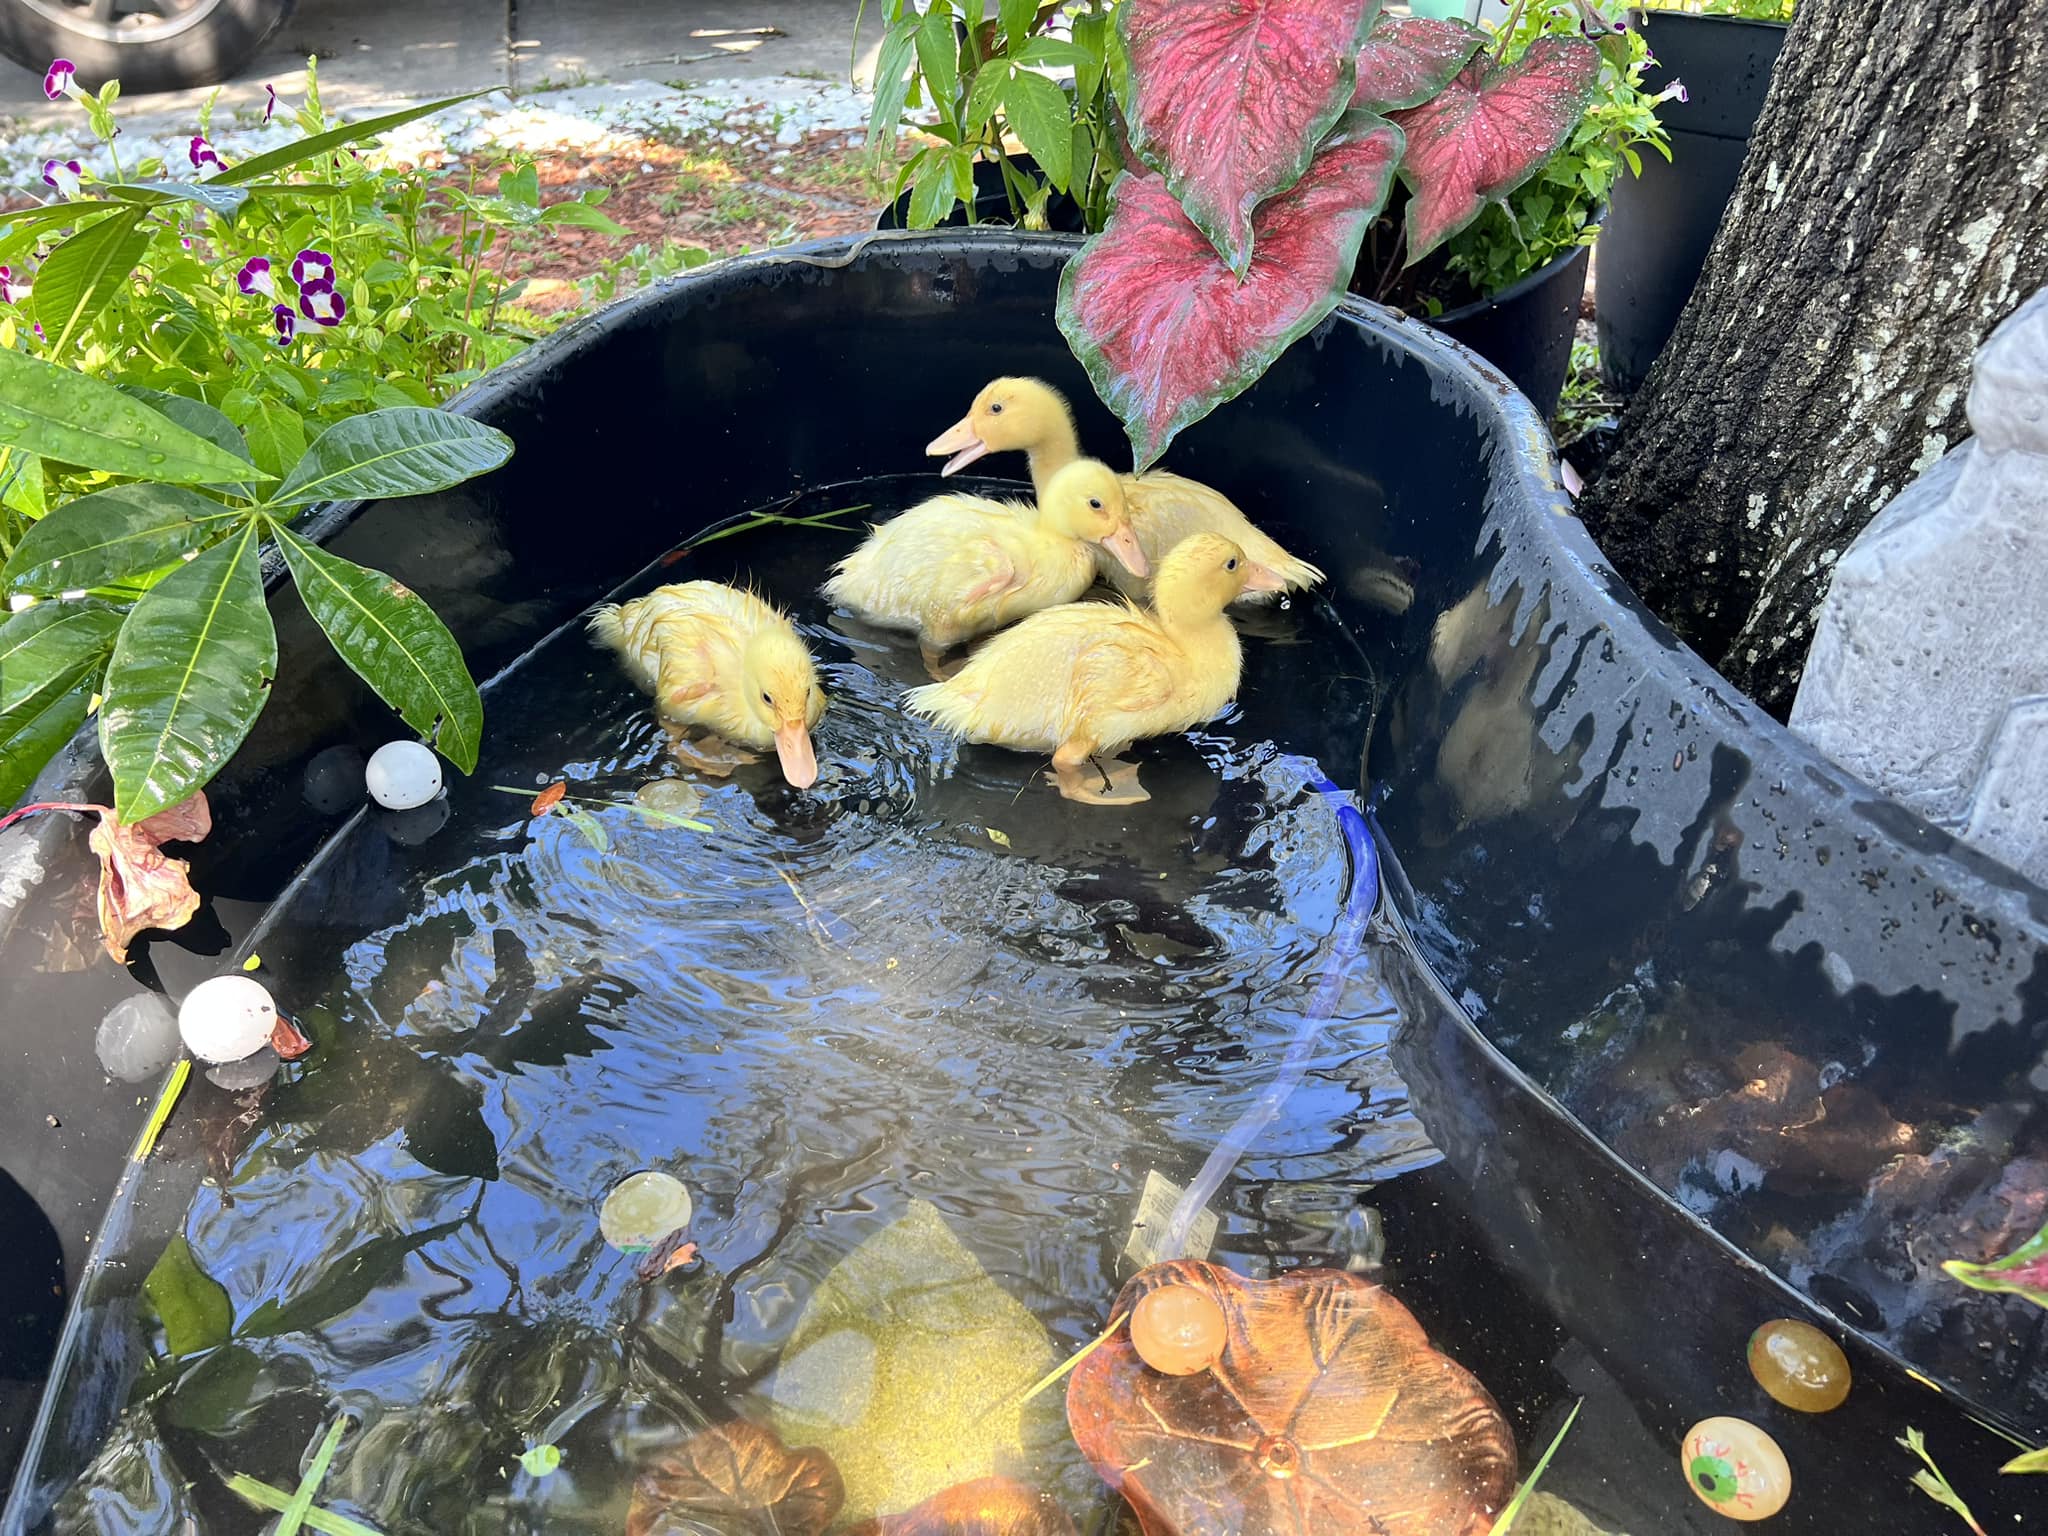 I got baby 4 new babies… Baby duckies lol 🦆 ￼